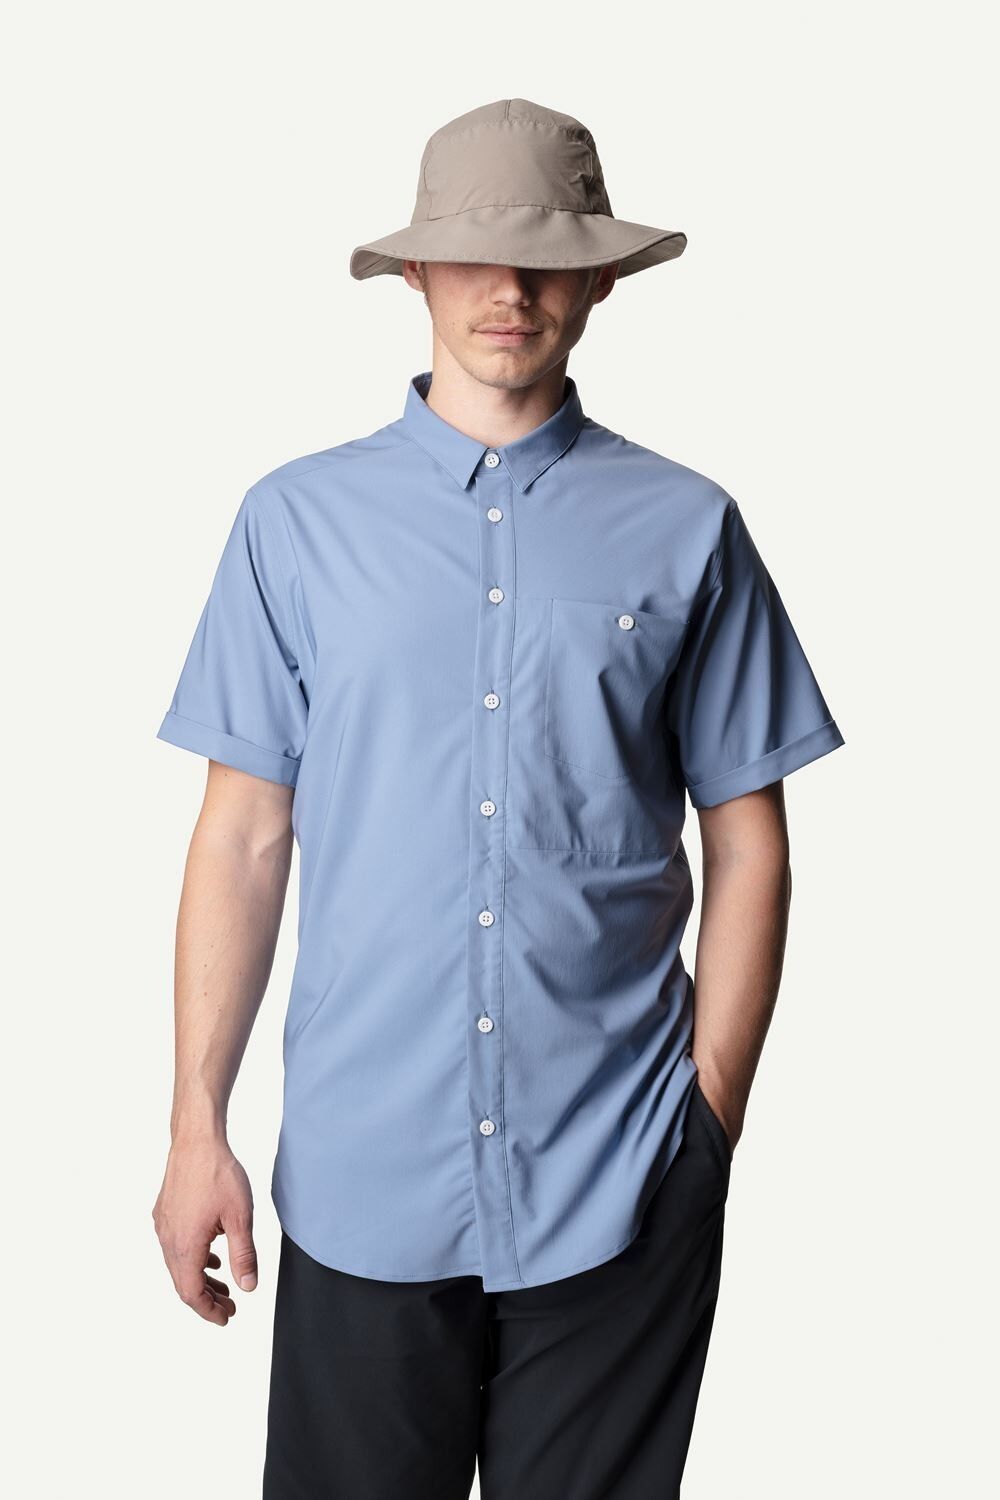 Houdini Shortsleeve Shirt, skjorte herre Up In The Blue 267594 S 2019